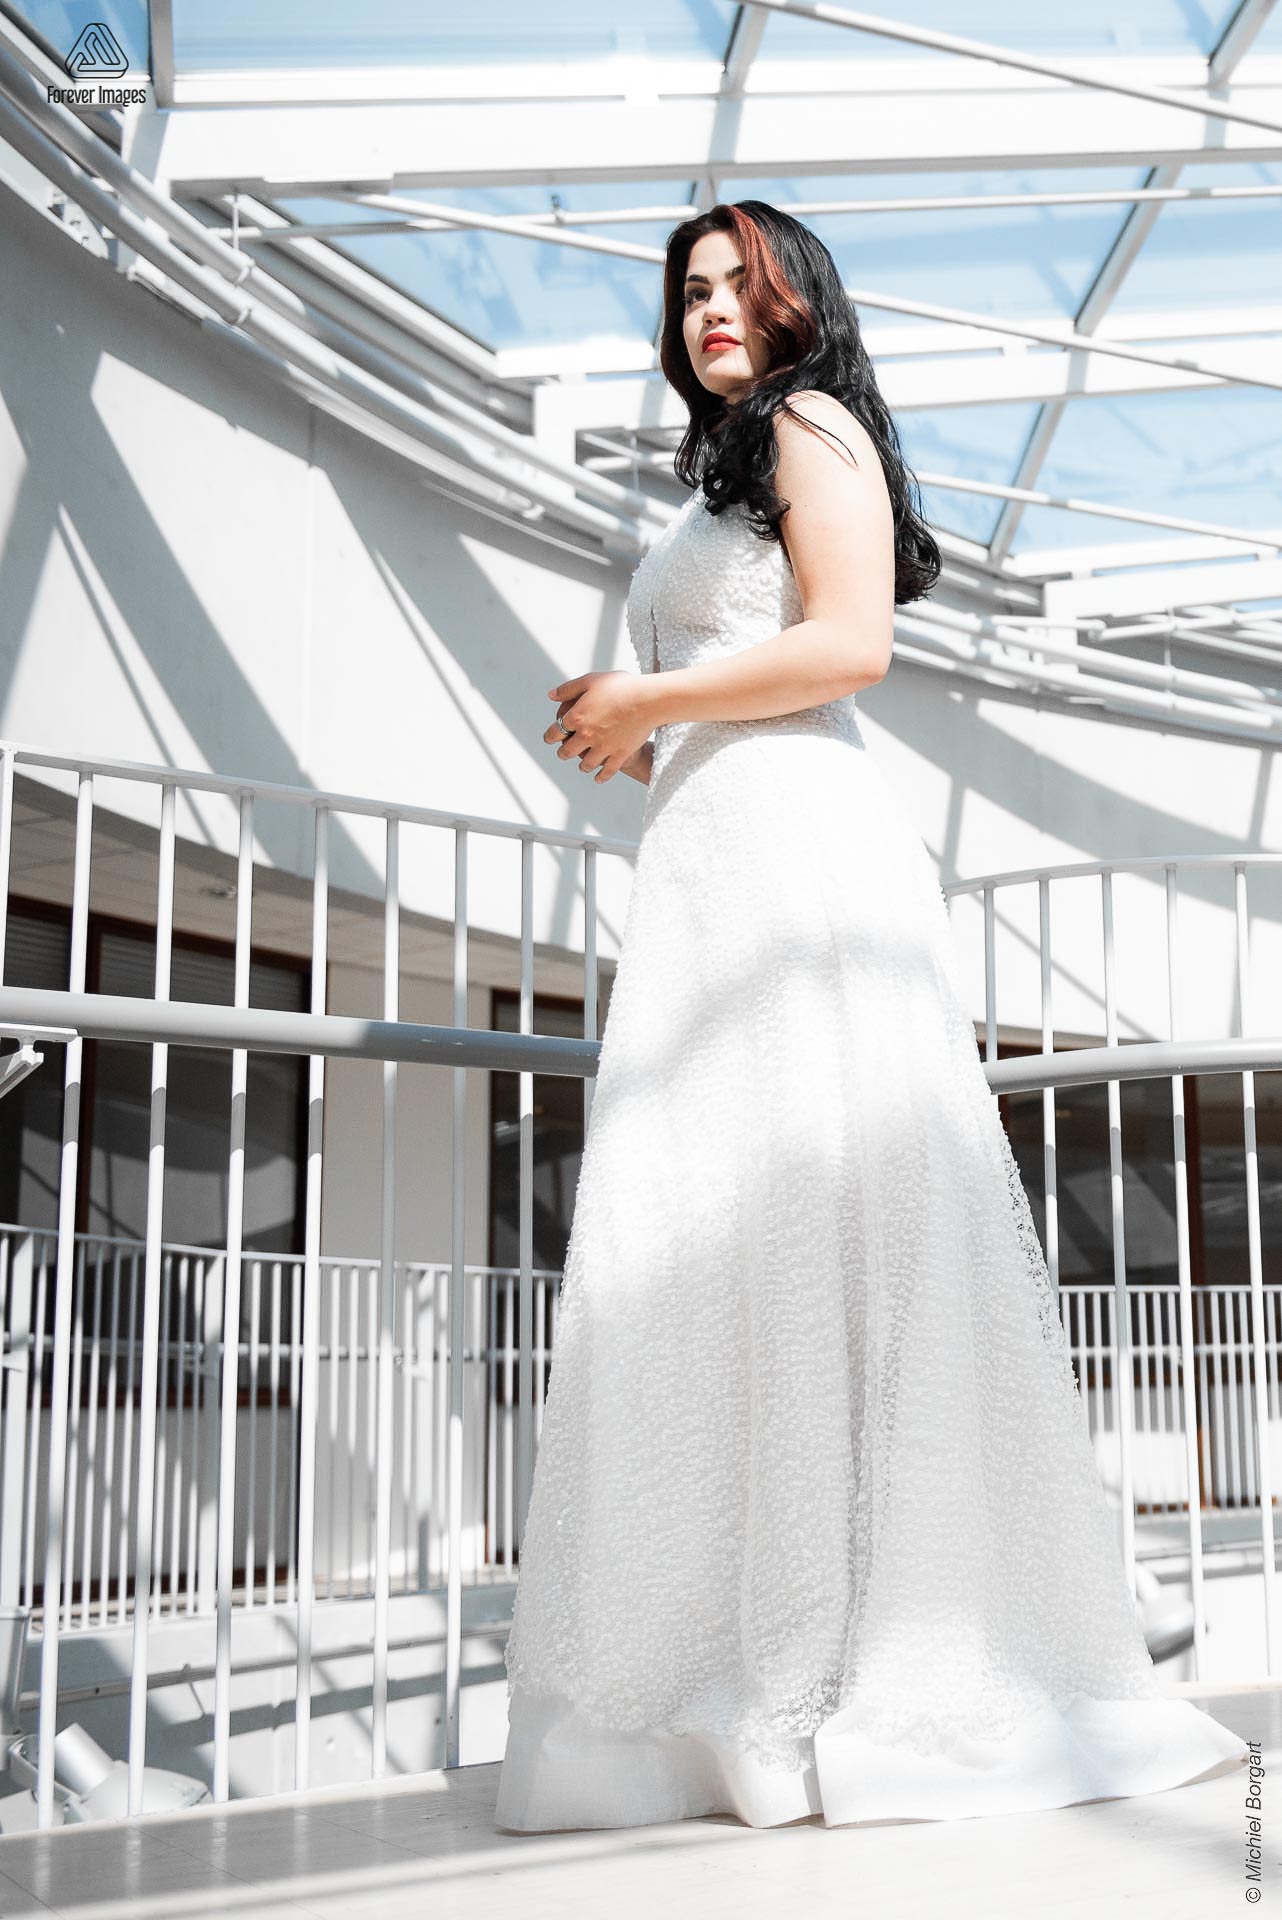 Fashion photo glamor beautiful lady white dress | Daphna Akkermans David Cardenas | Fashion Photographer Michiel Borgart - Forever Images.